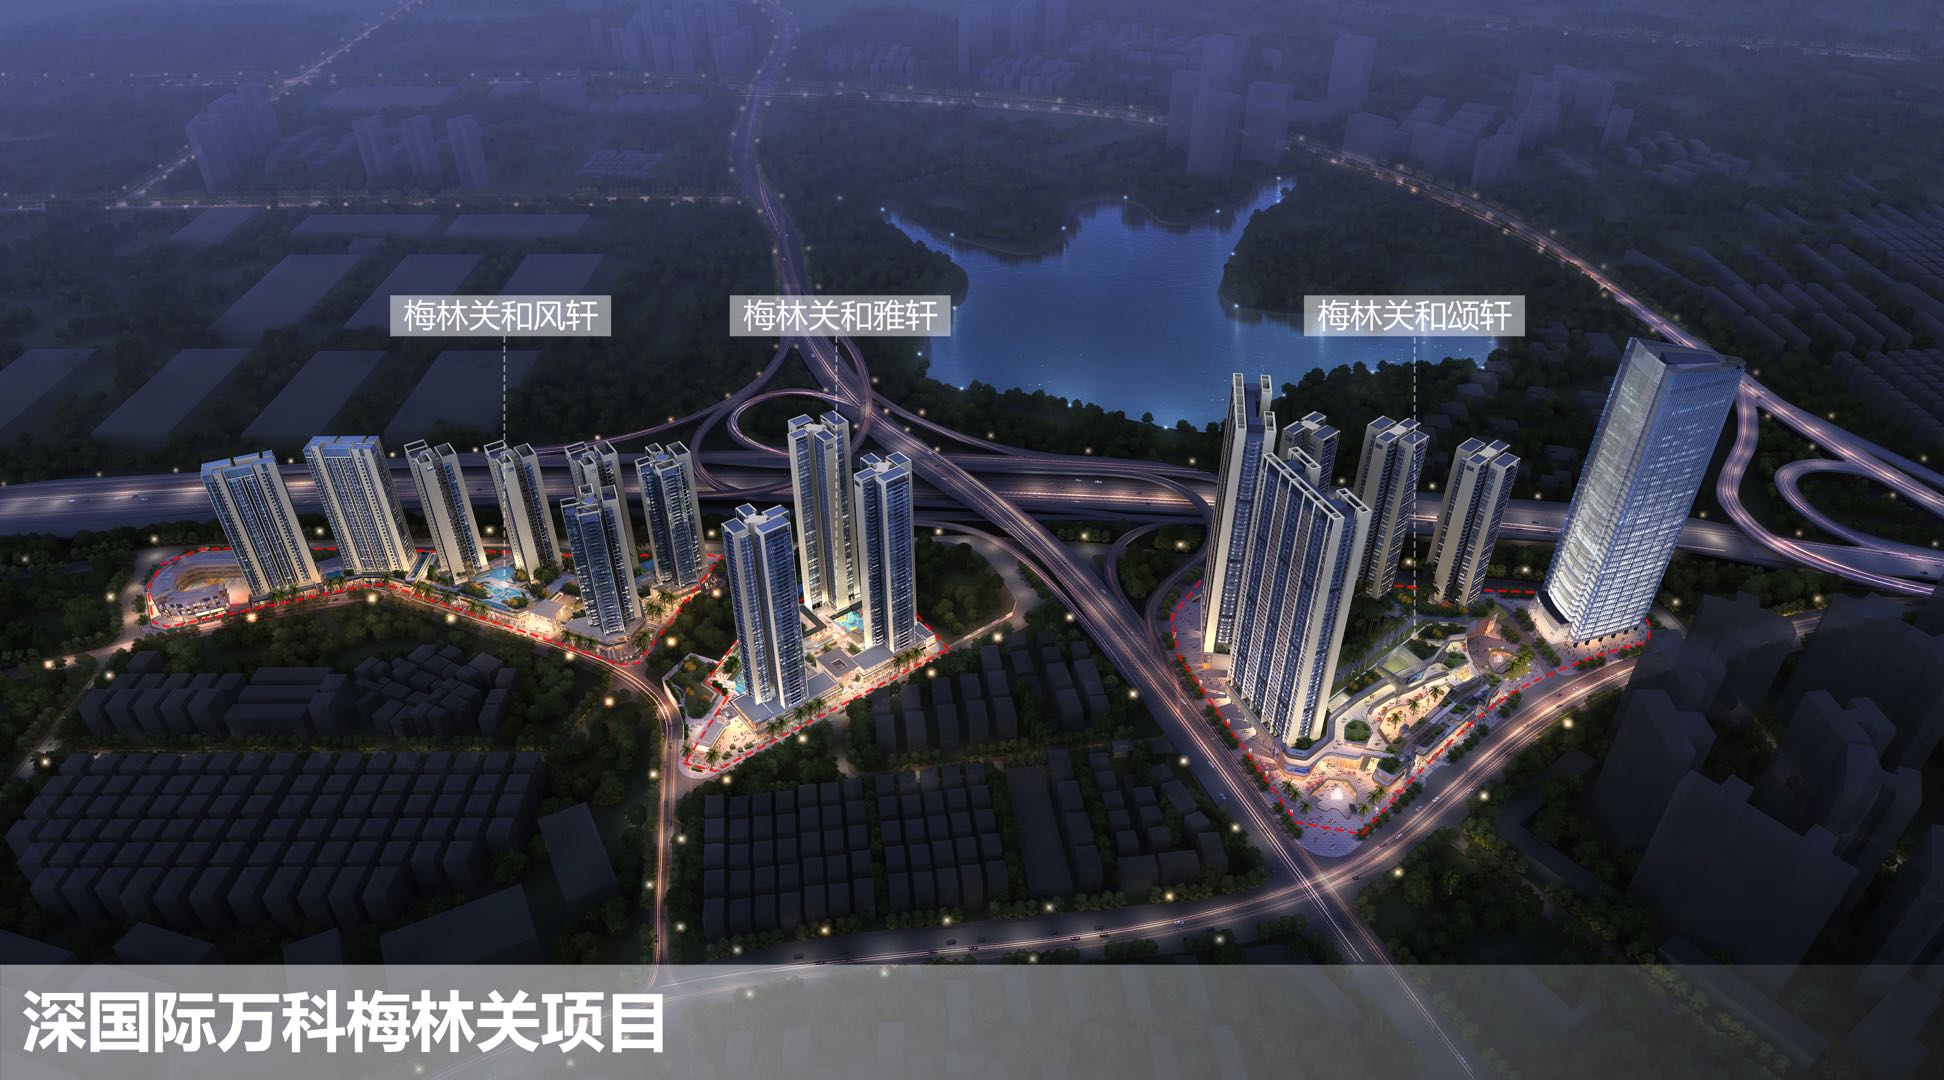 Shenzhen International Vanke meilinguan project